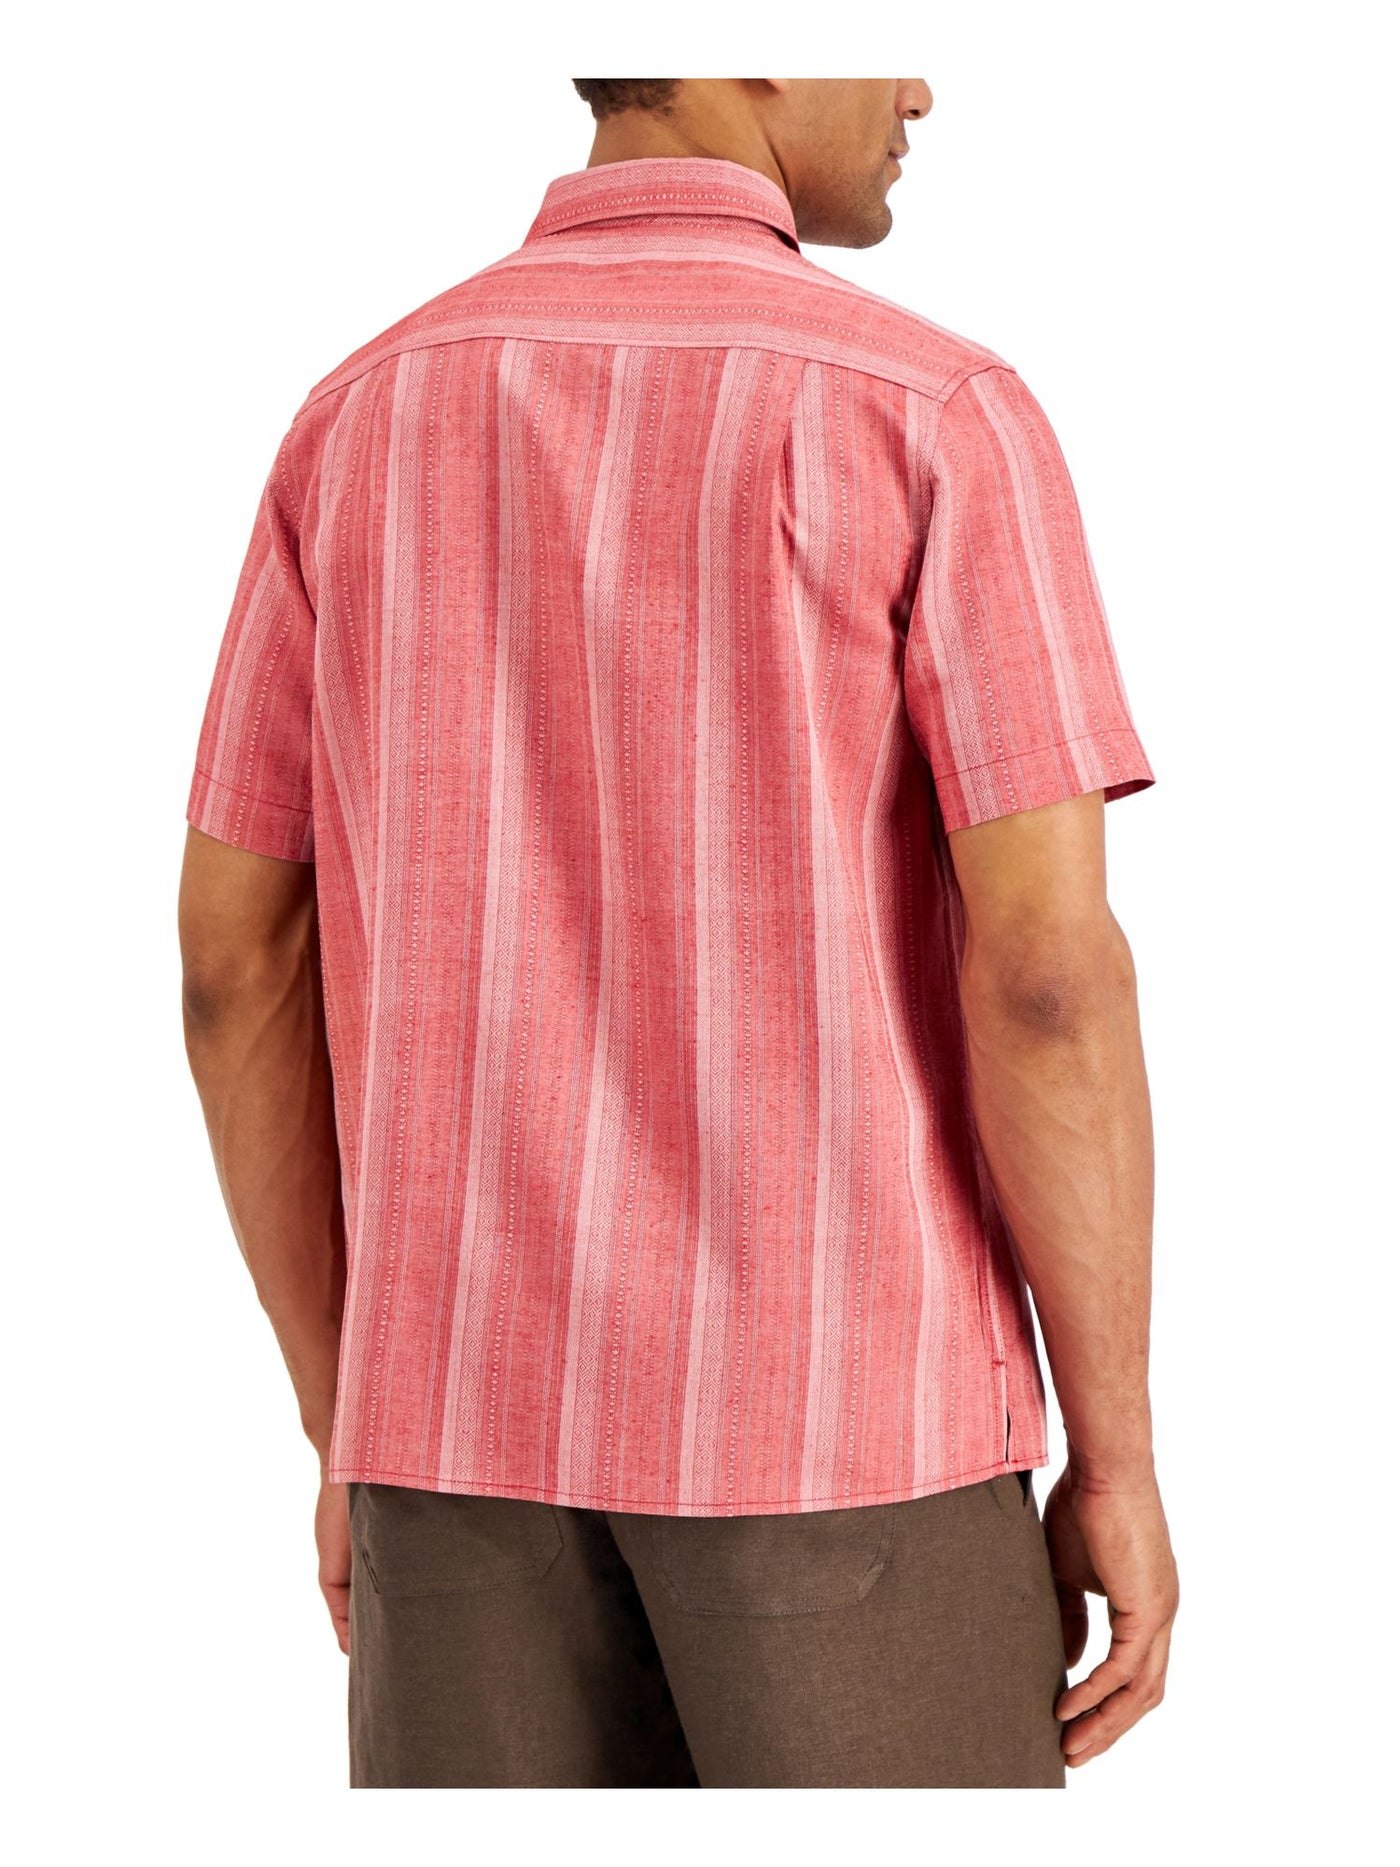 TASSO ELBA Mens Red Printed Spread Collar Classic Fit Dress Shirt L